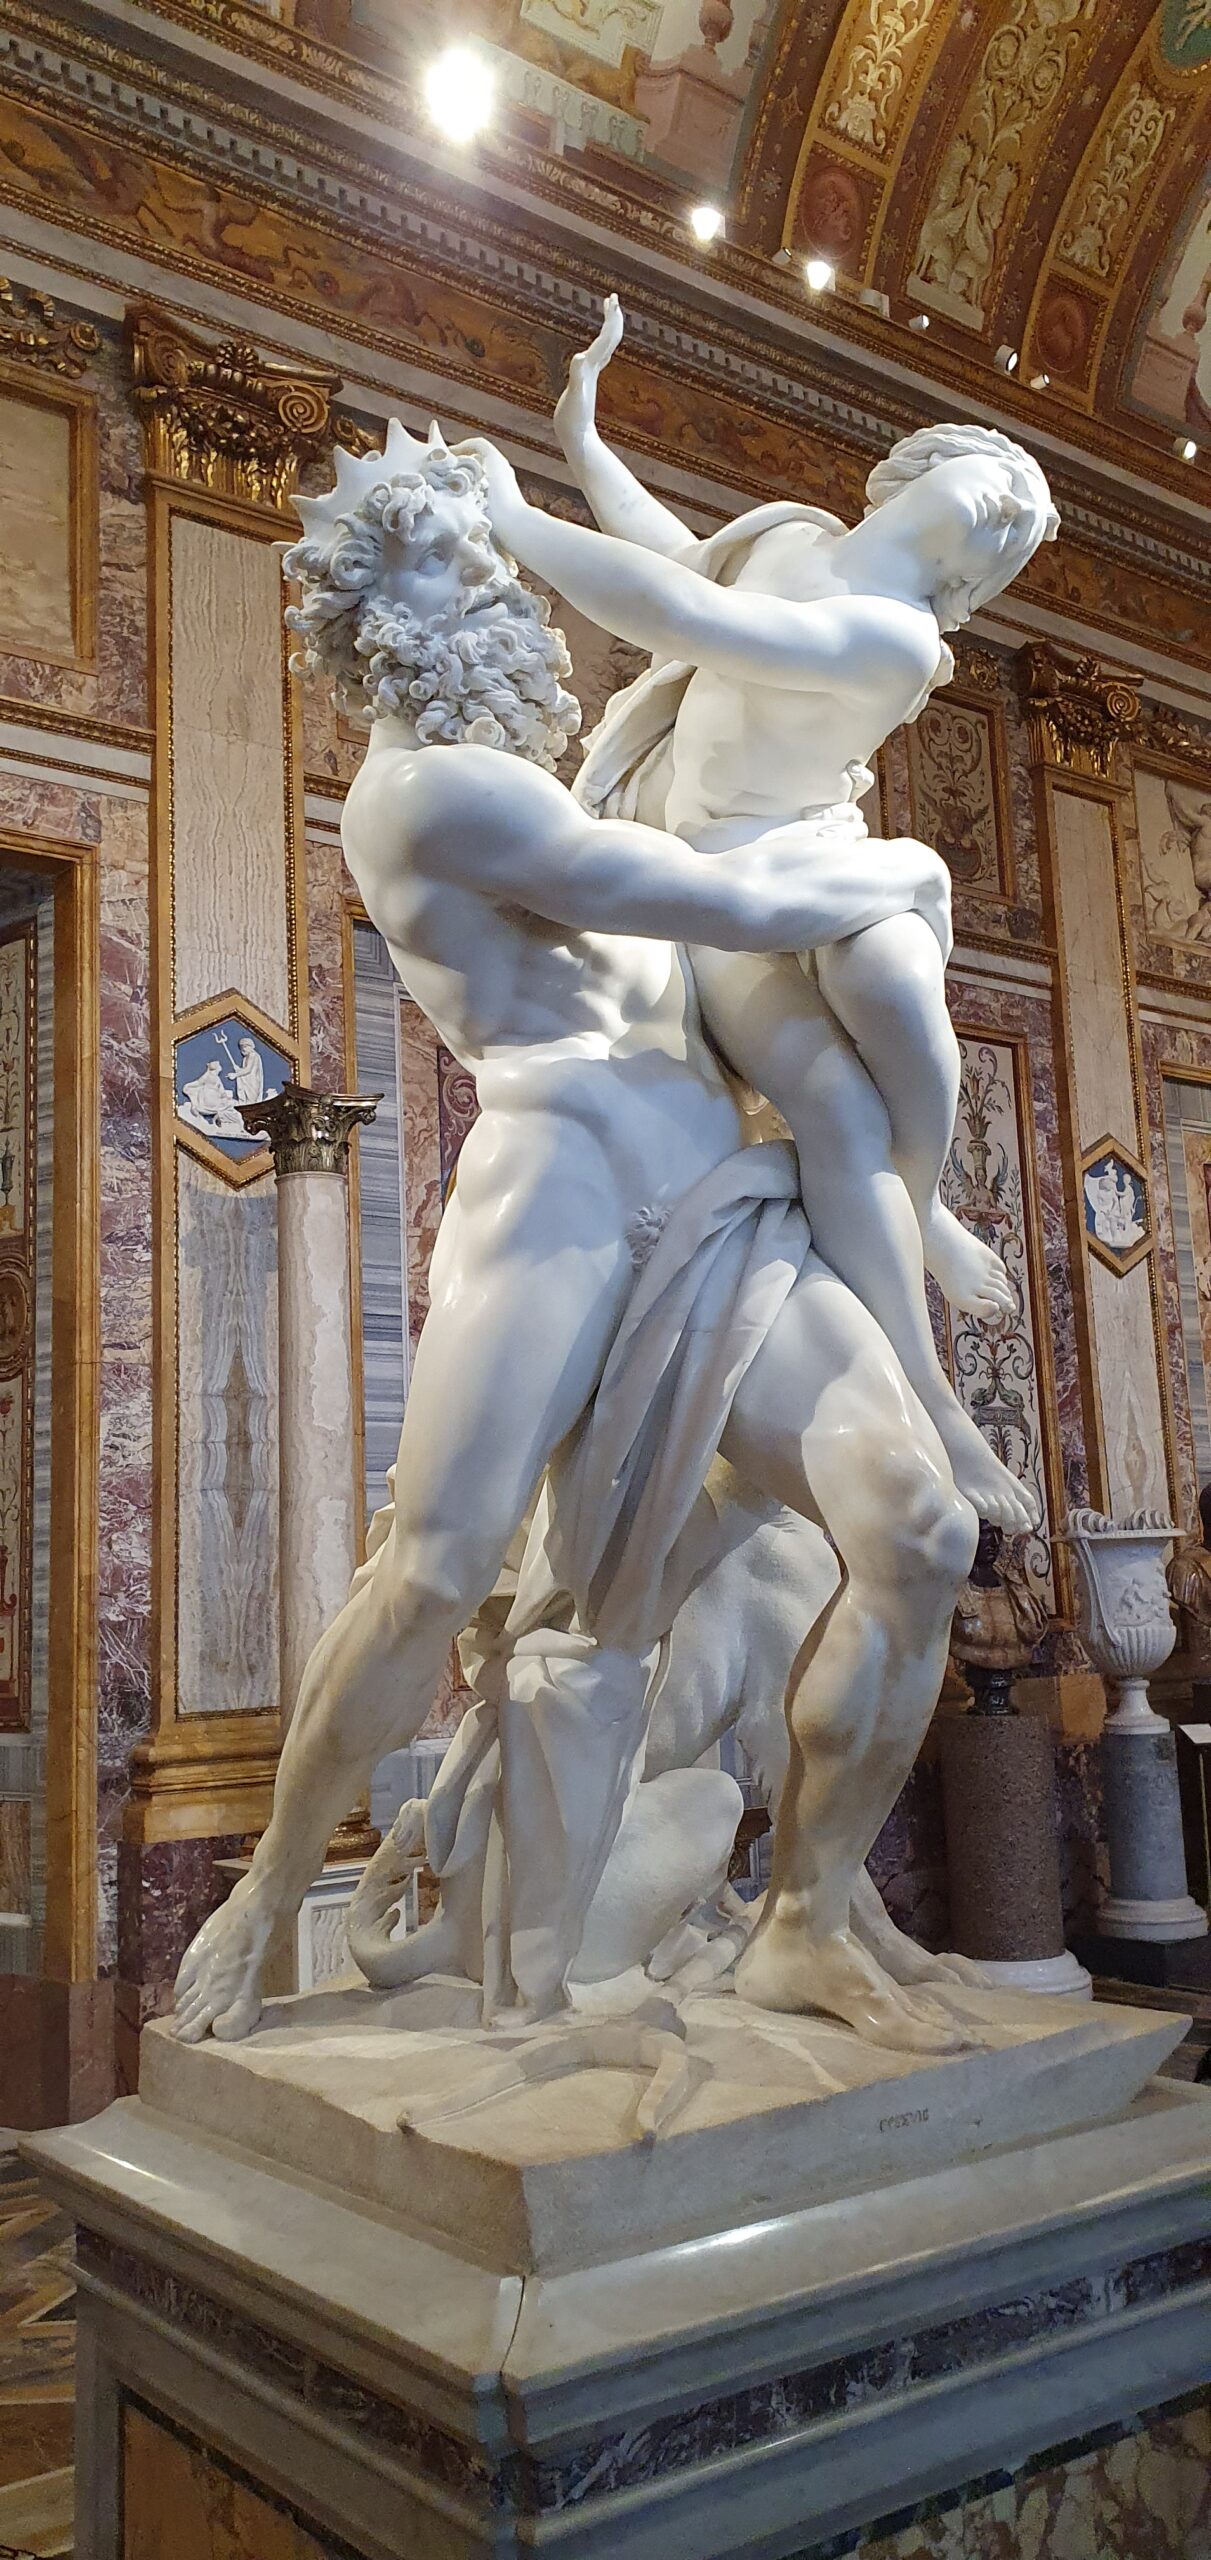 The Rape of Proserpine by Bernini